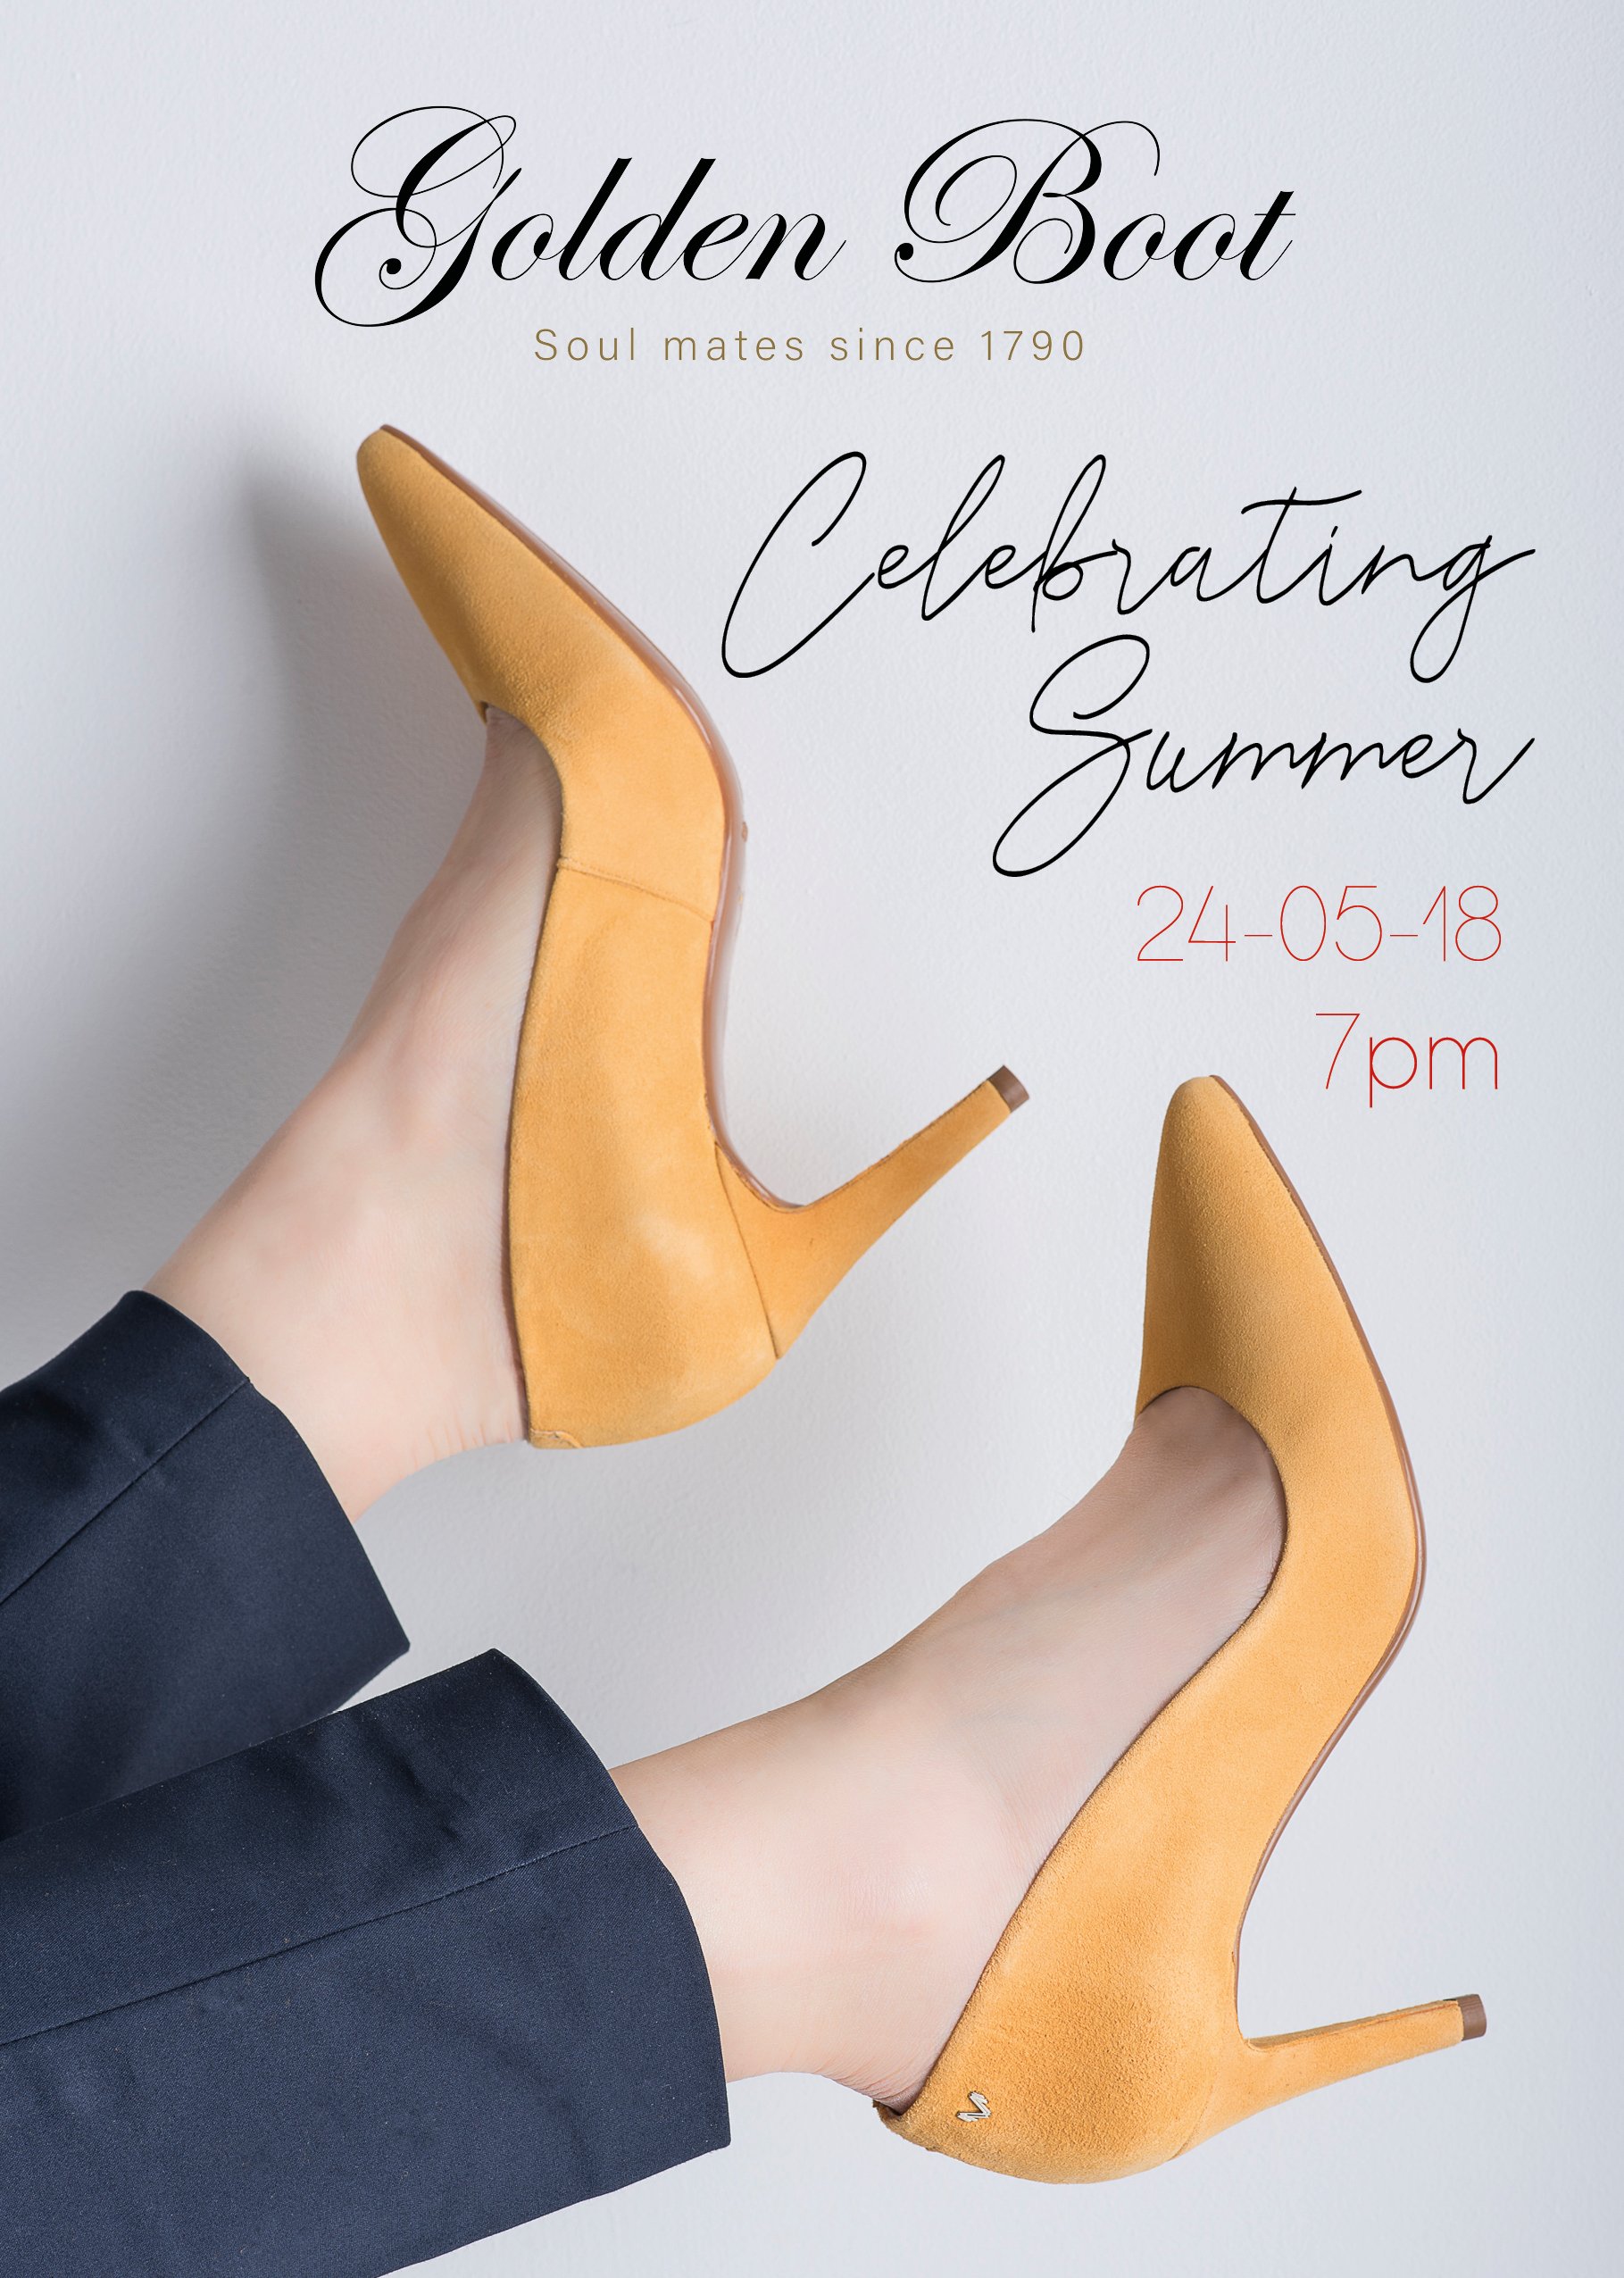 Celebrating Summer – Golden Boot Ladies’ evening 2018